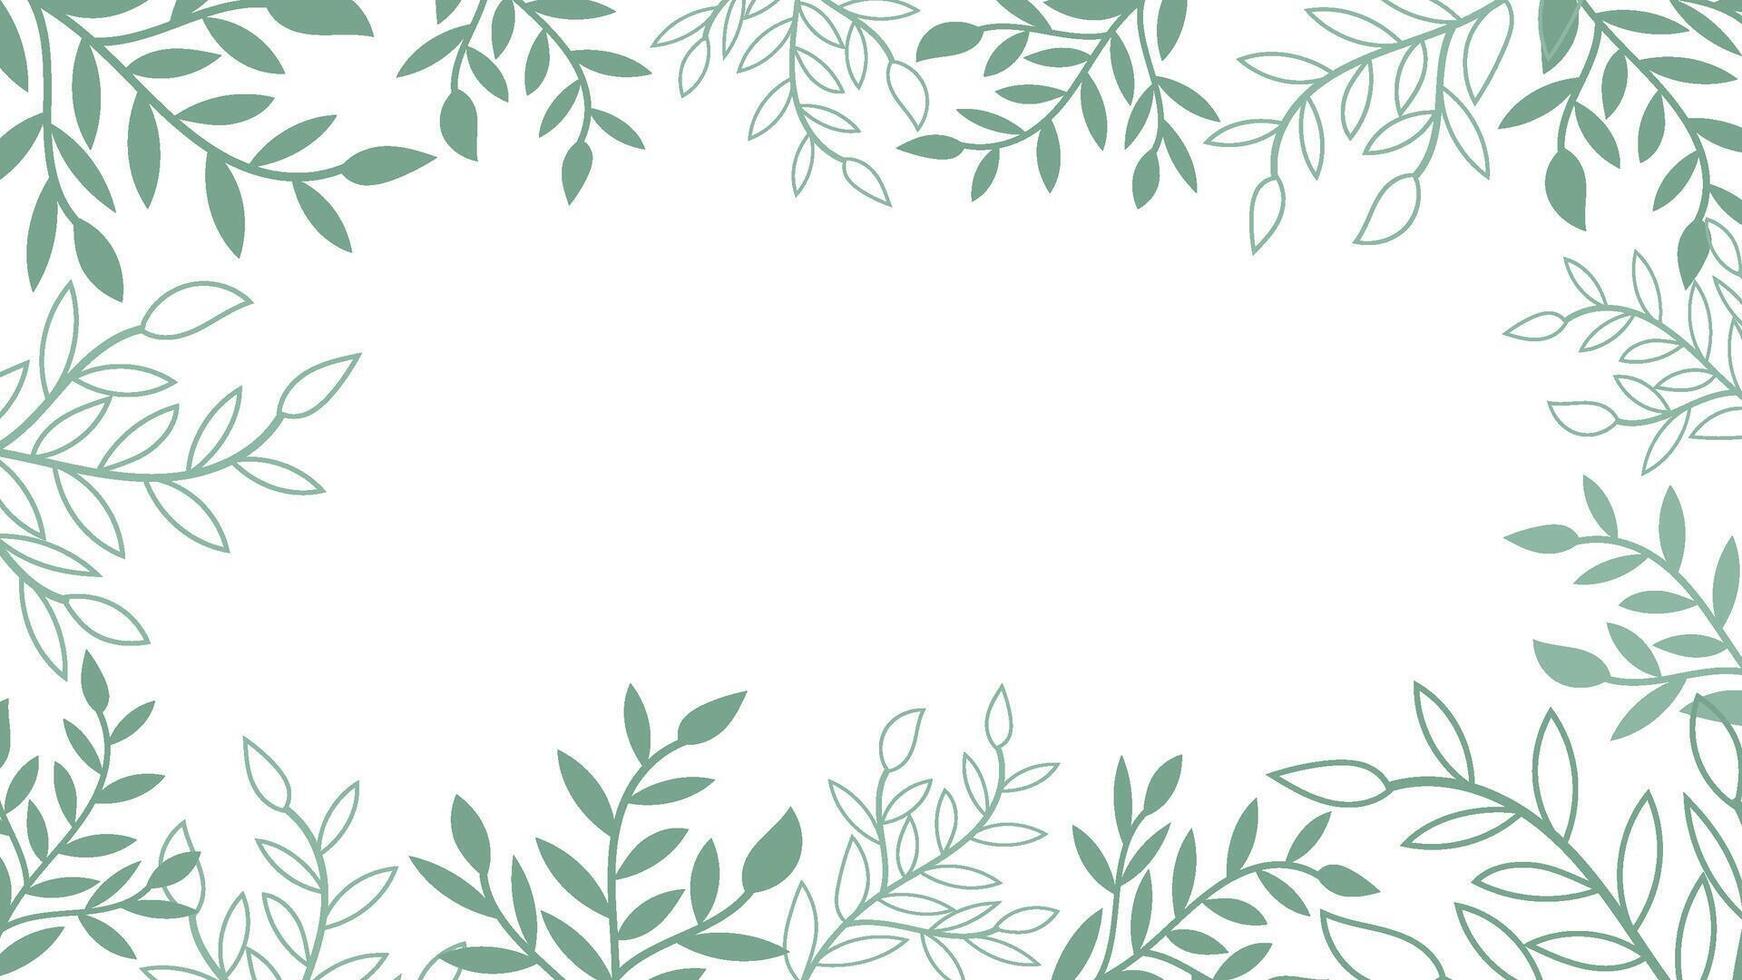 Abstract Green Leaves background seamless Vector design flower border frame